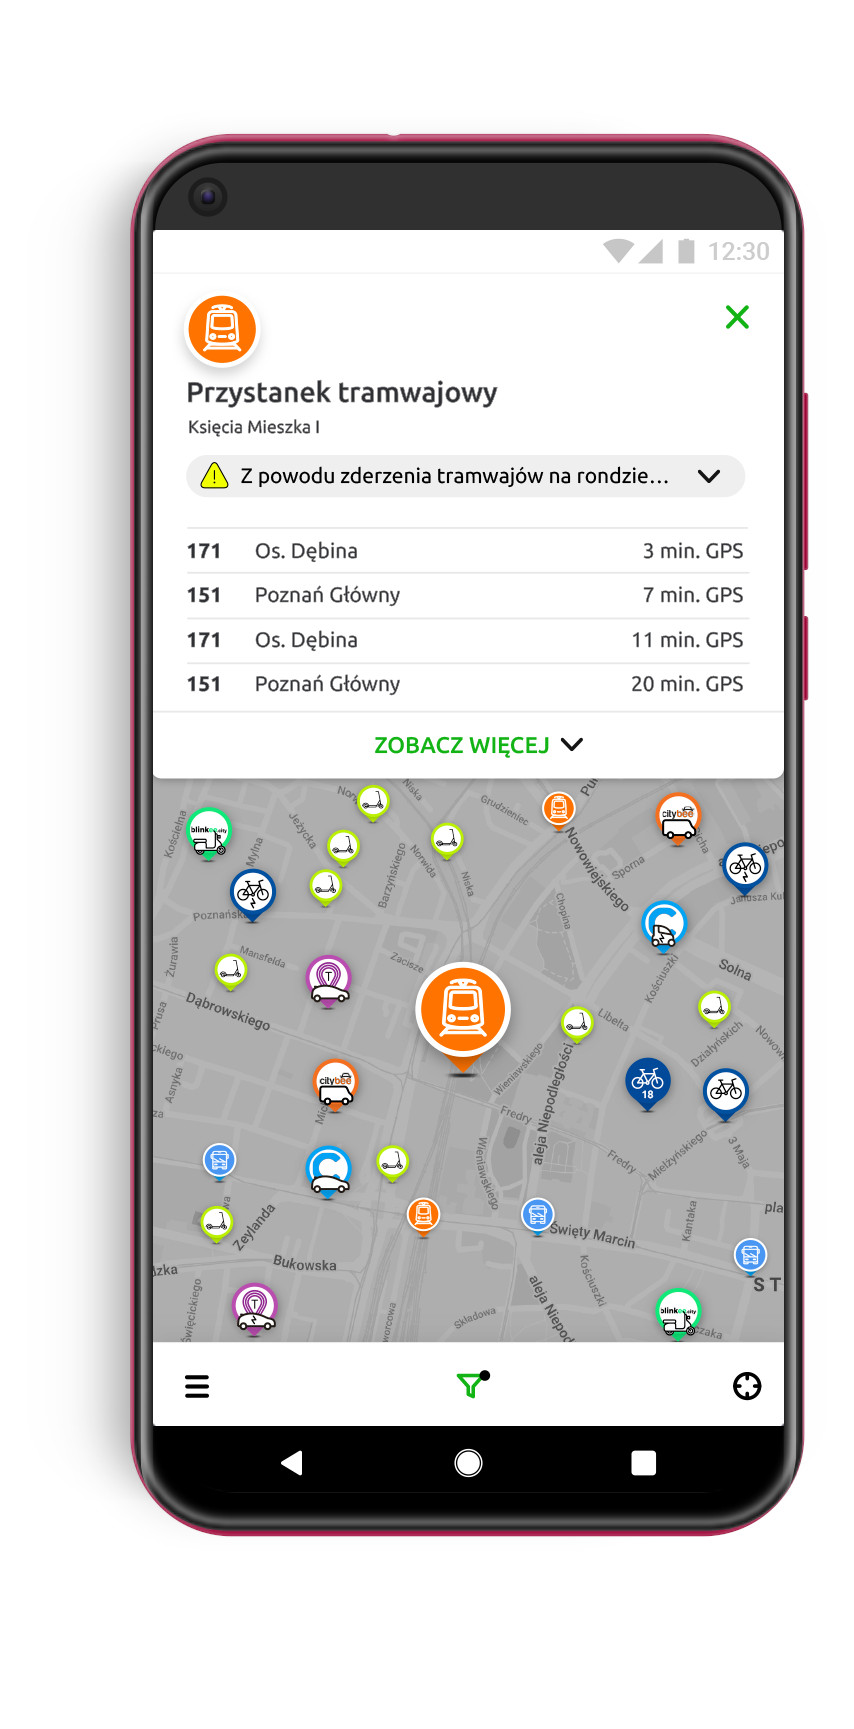 Real time public transport information based on GPS position